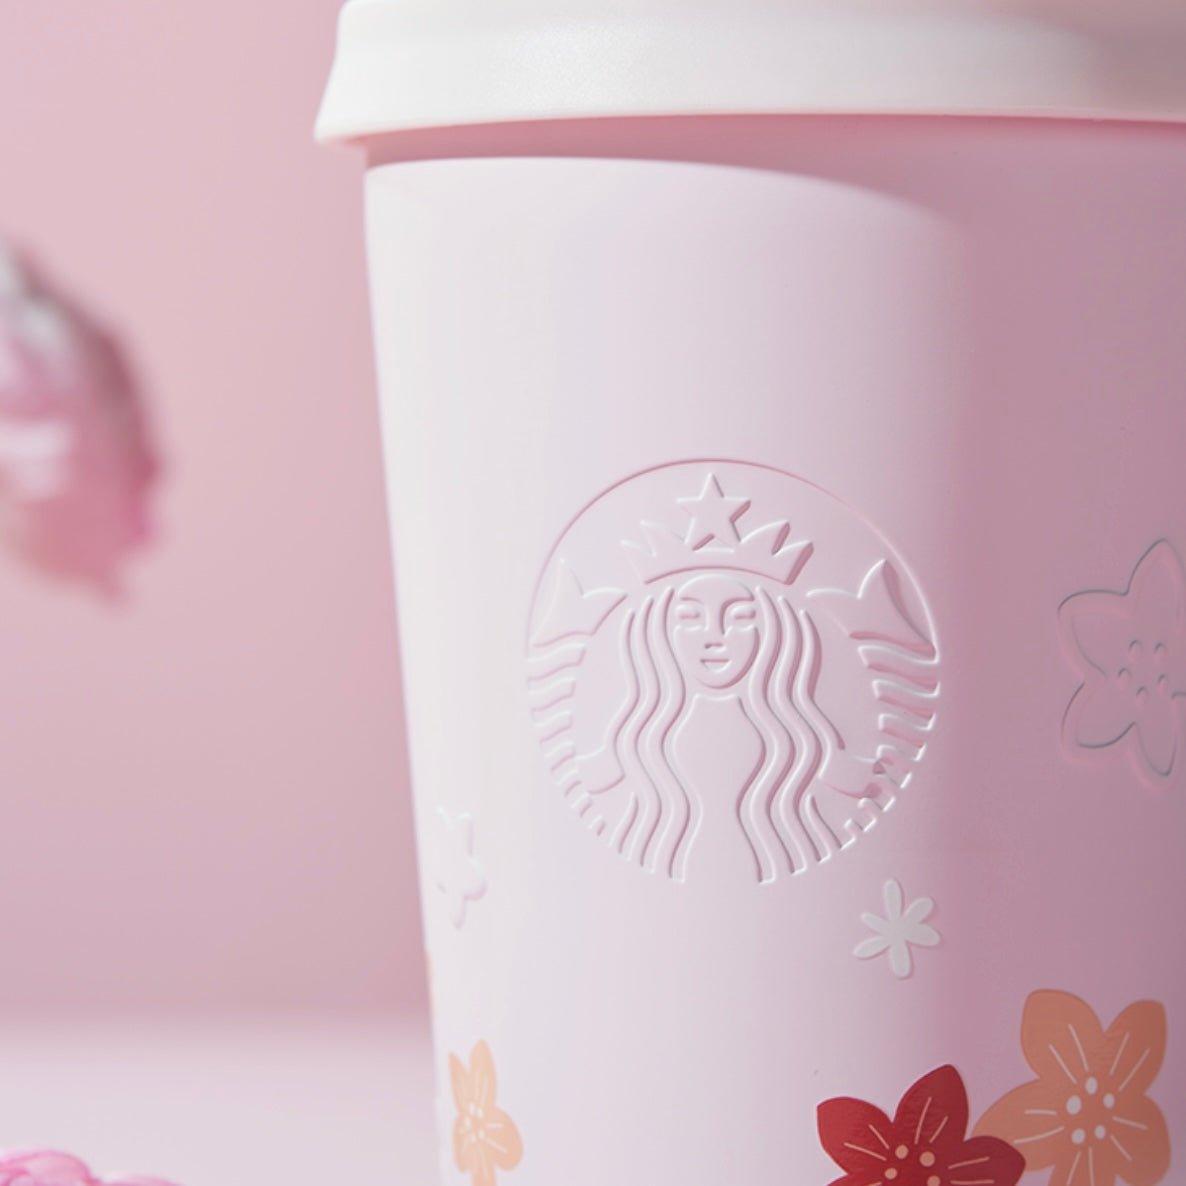 Starbucks 384ml/13oz Pink Blossom Stainless Steel Travelling Cup - Ann Ann Starbucks